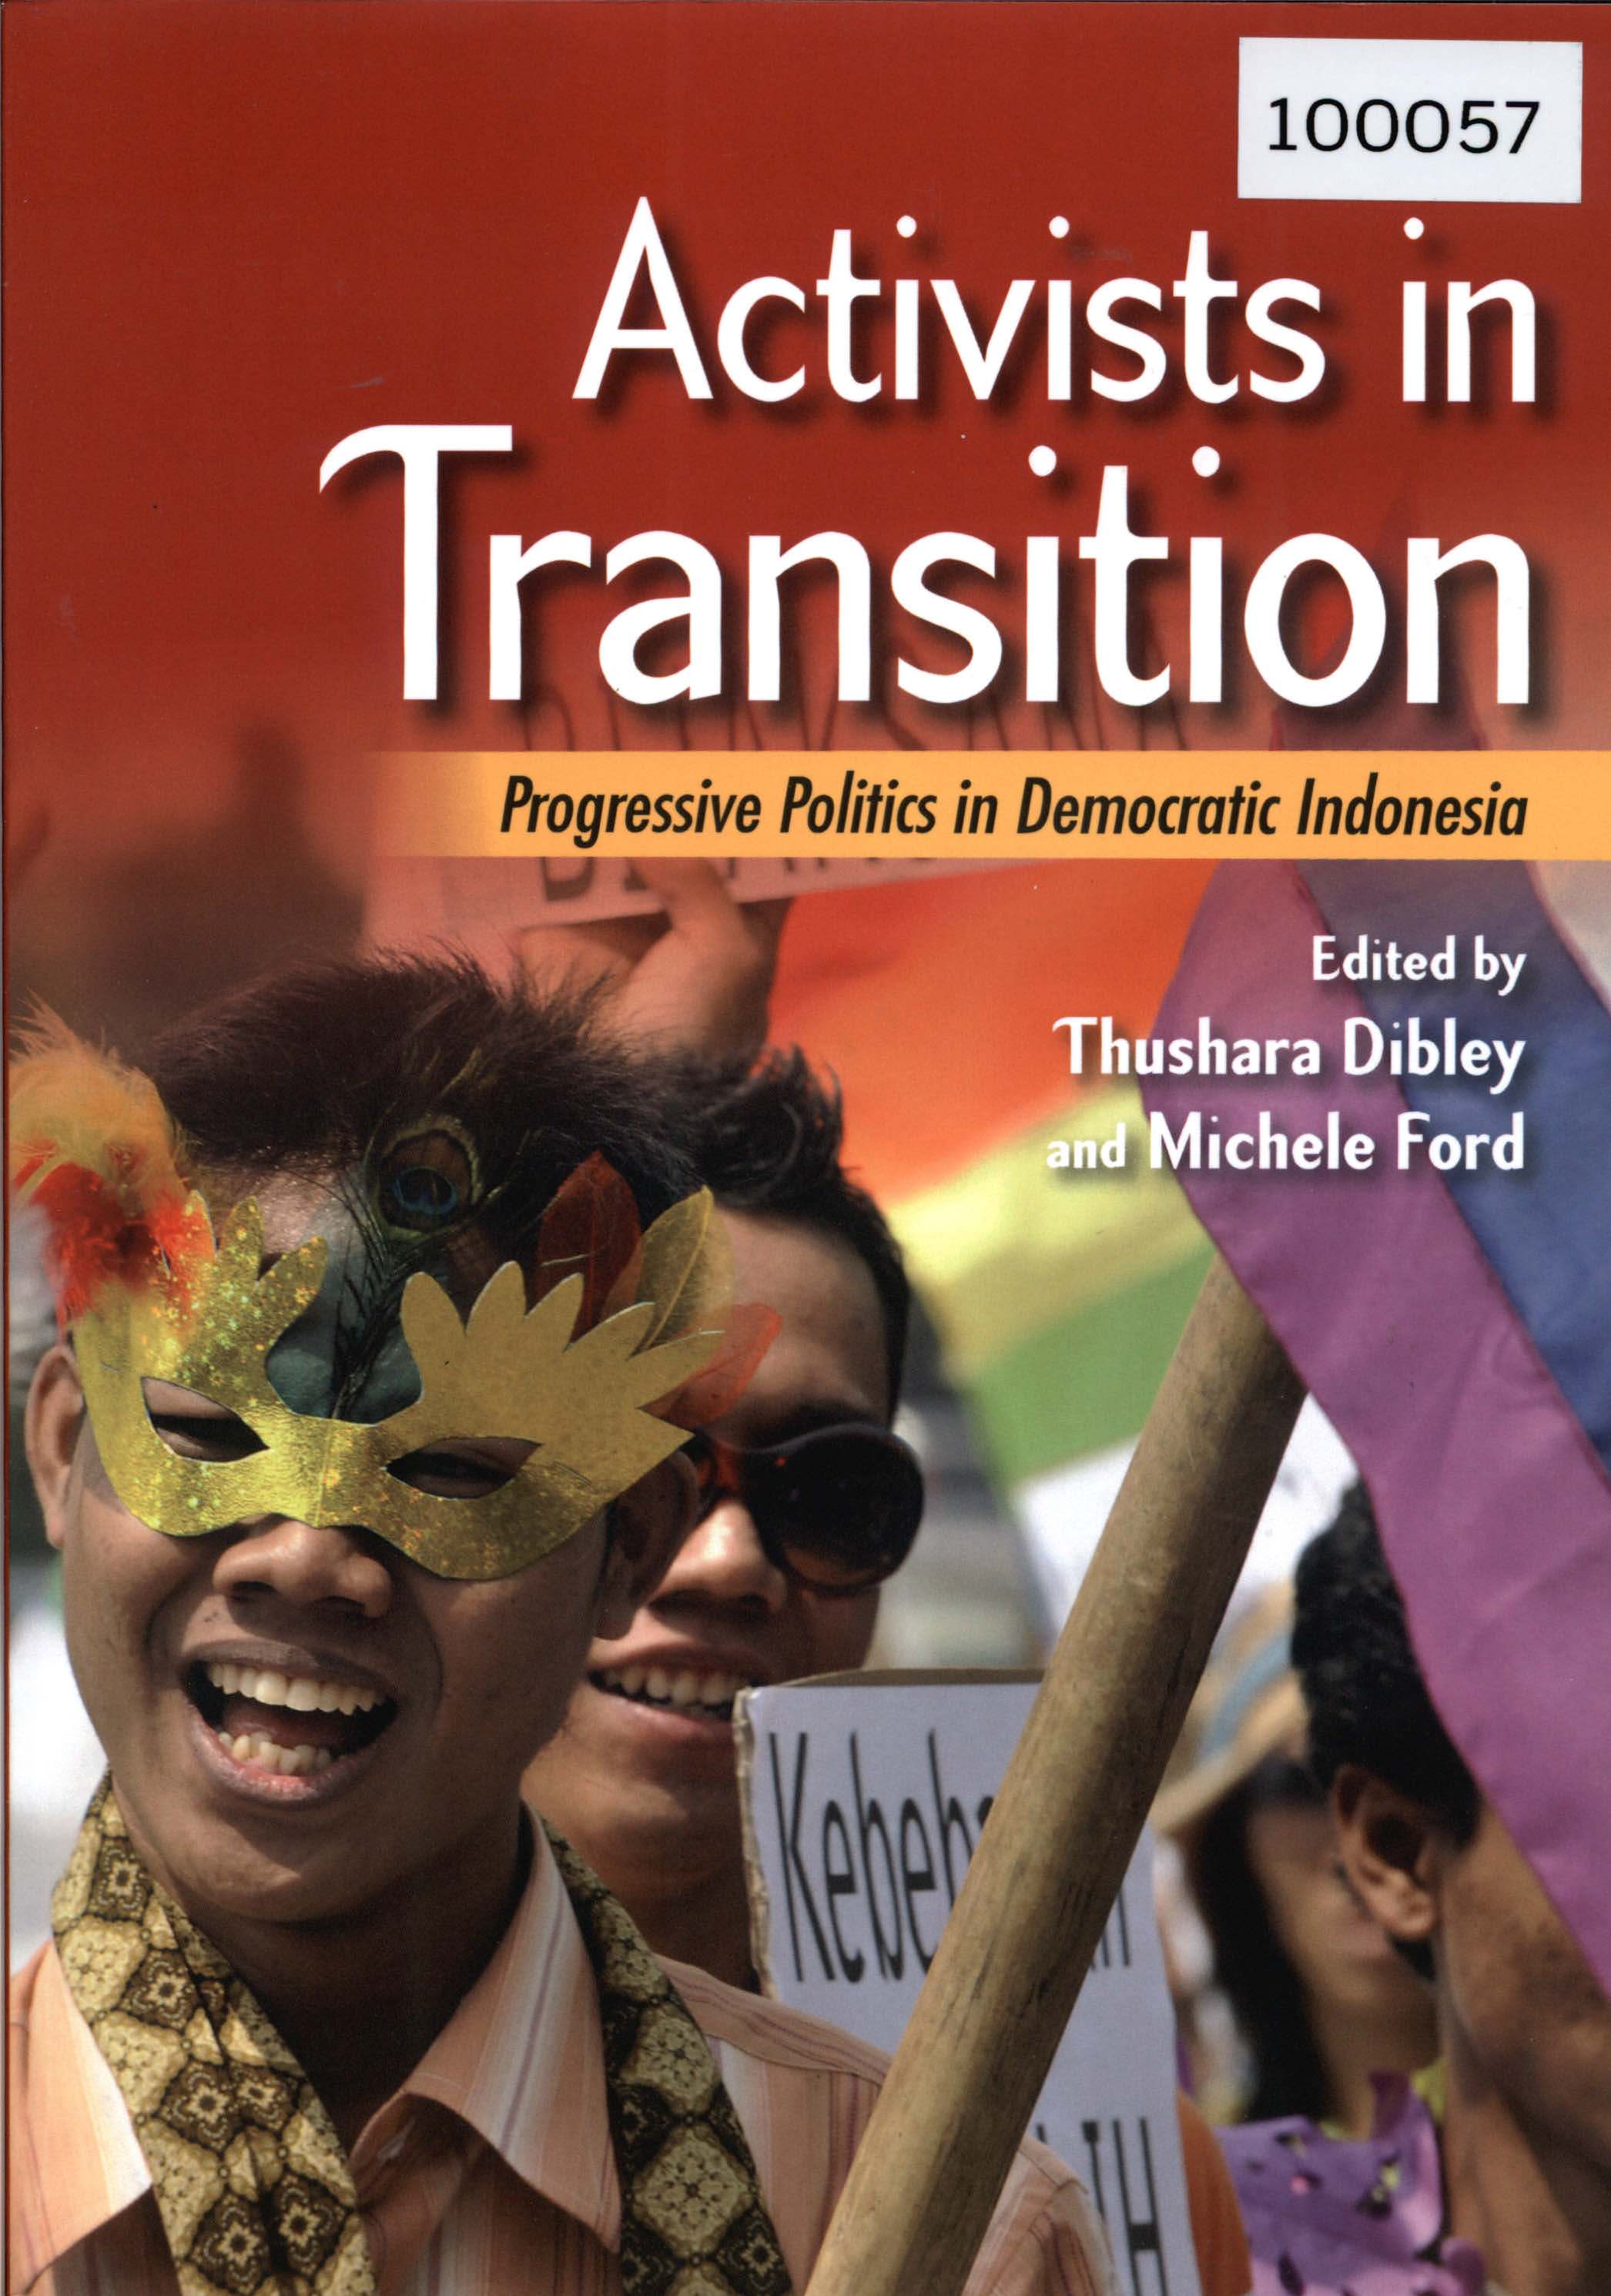 Activists in Transition: Progressive Politics in Democratic Indonesia